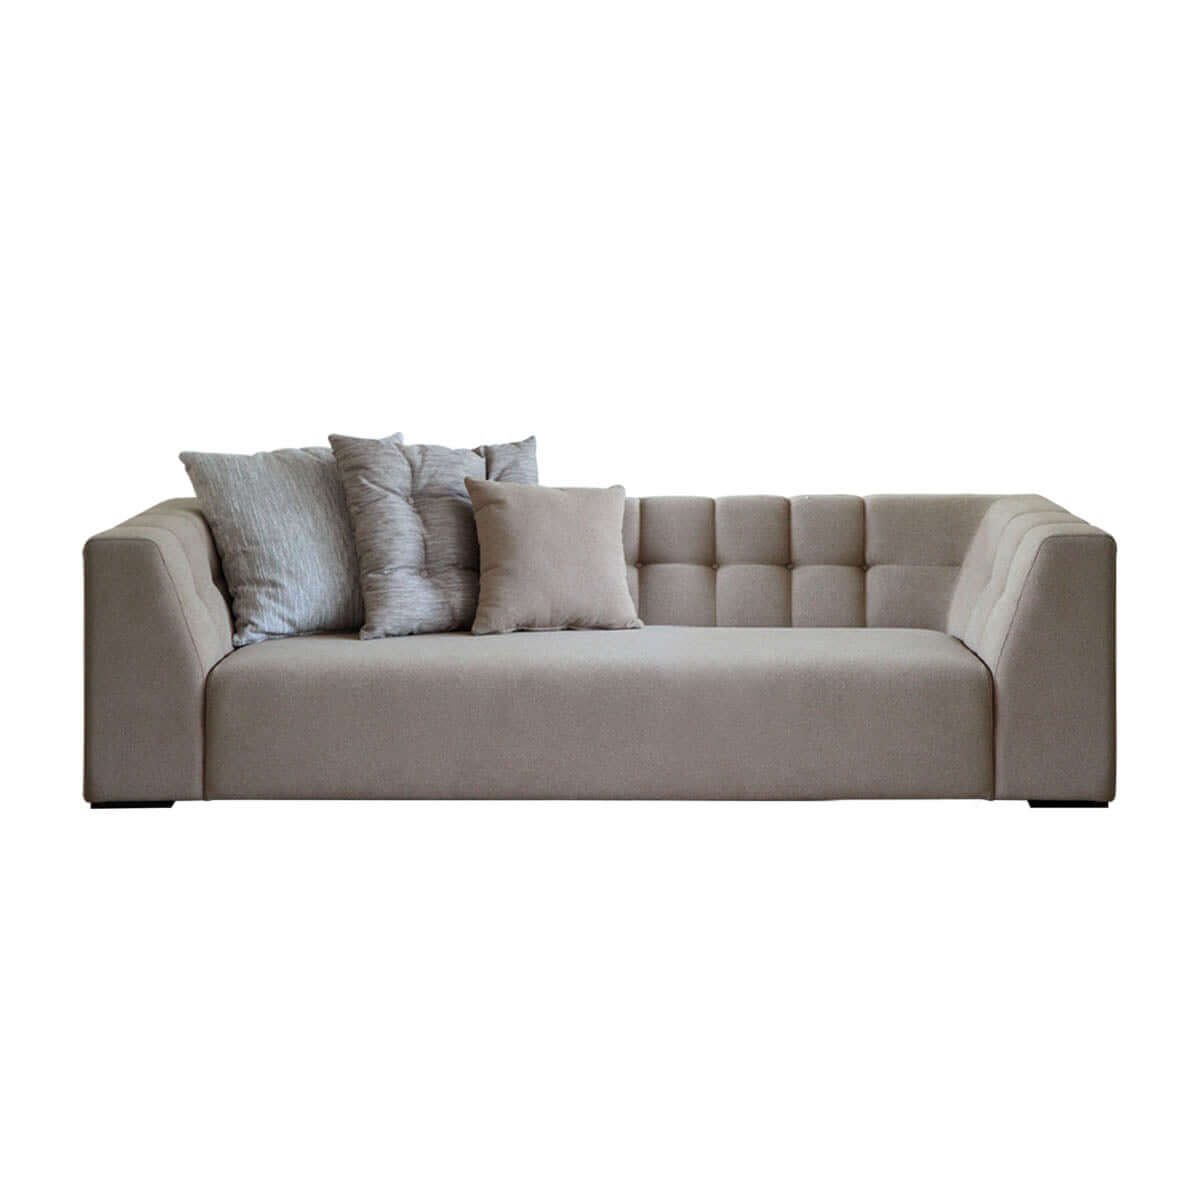 3 seat stylish sofa